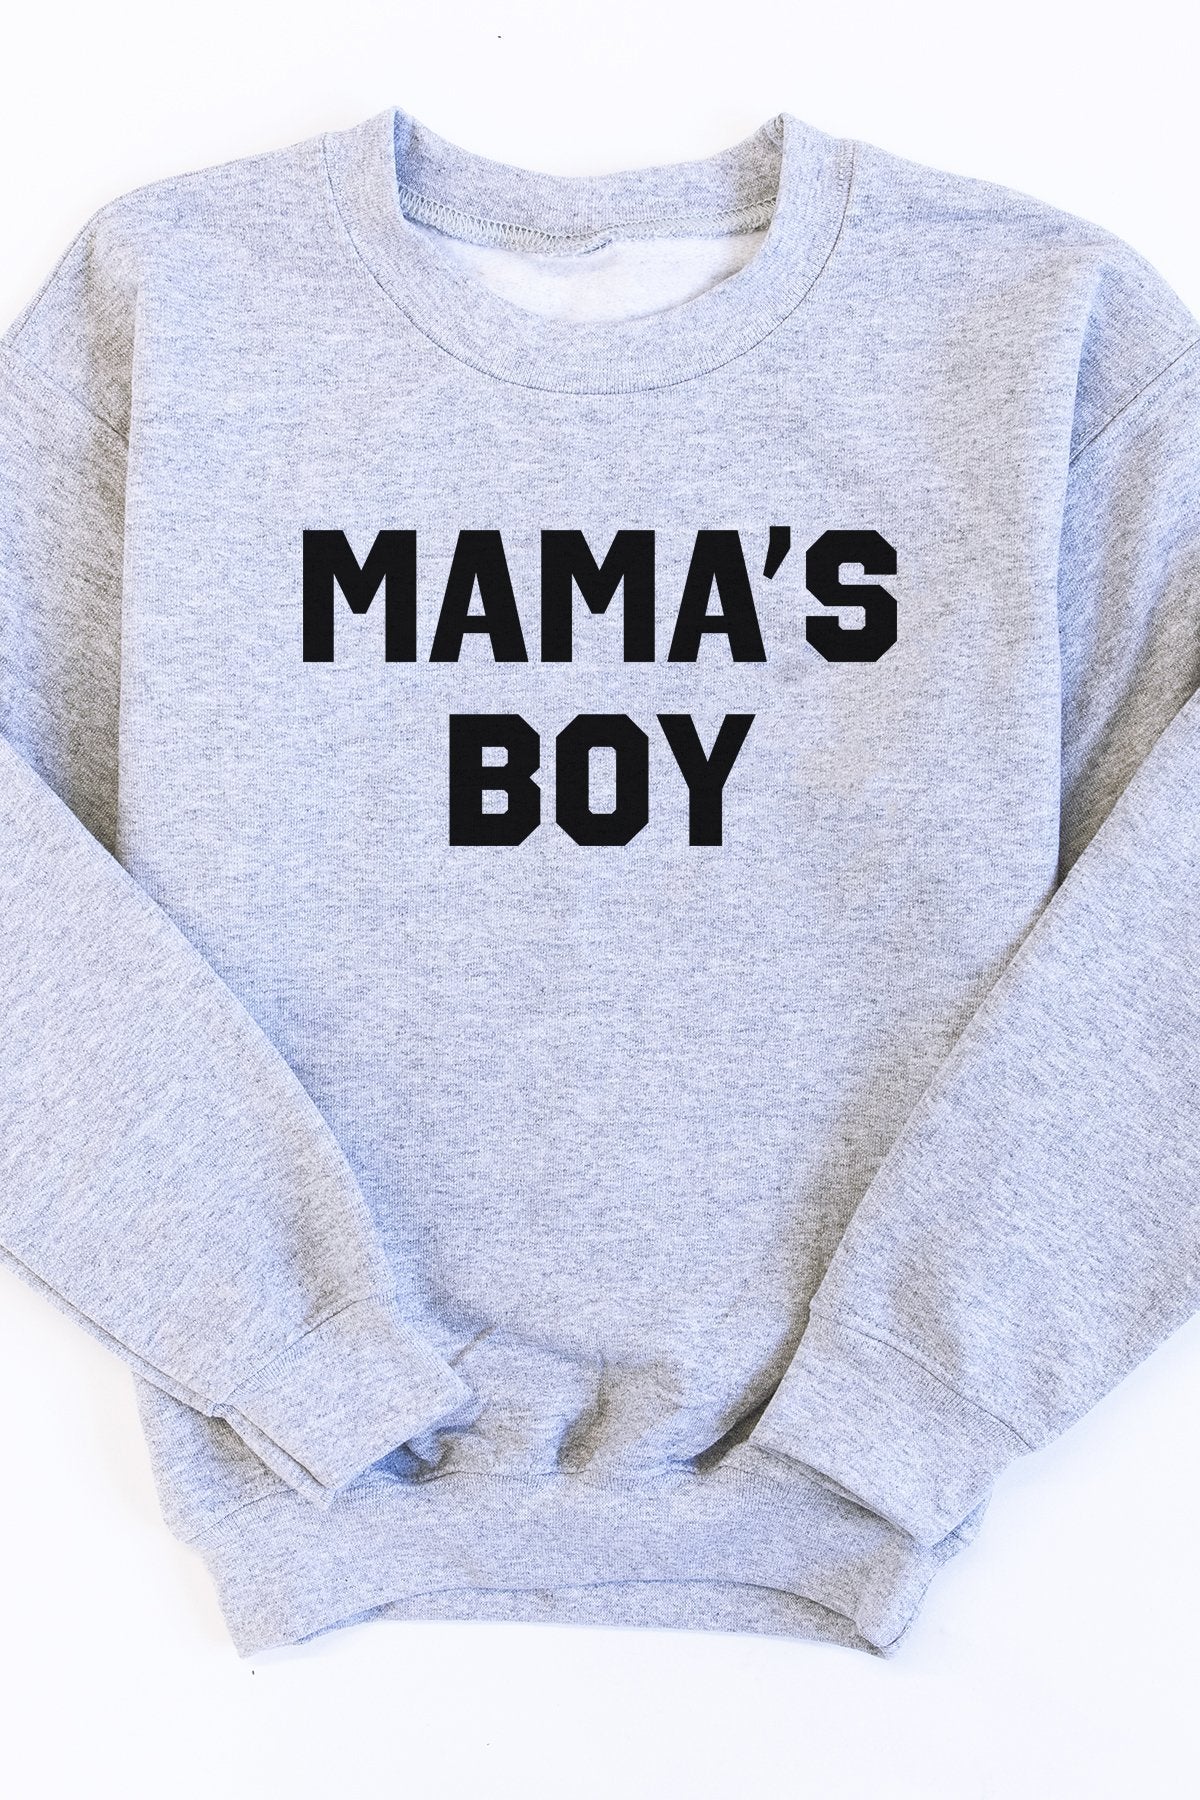 Mama's Boy Grey Kids Graphic Sweatshirt